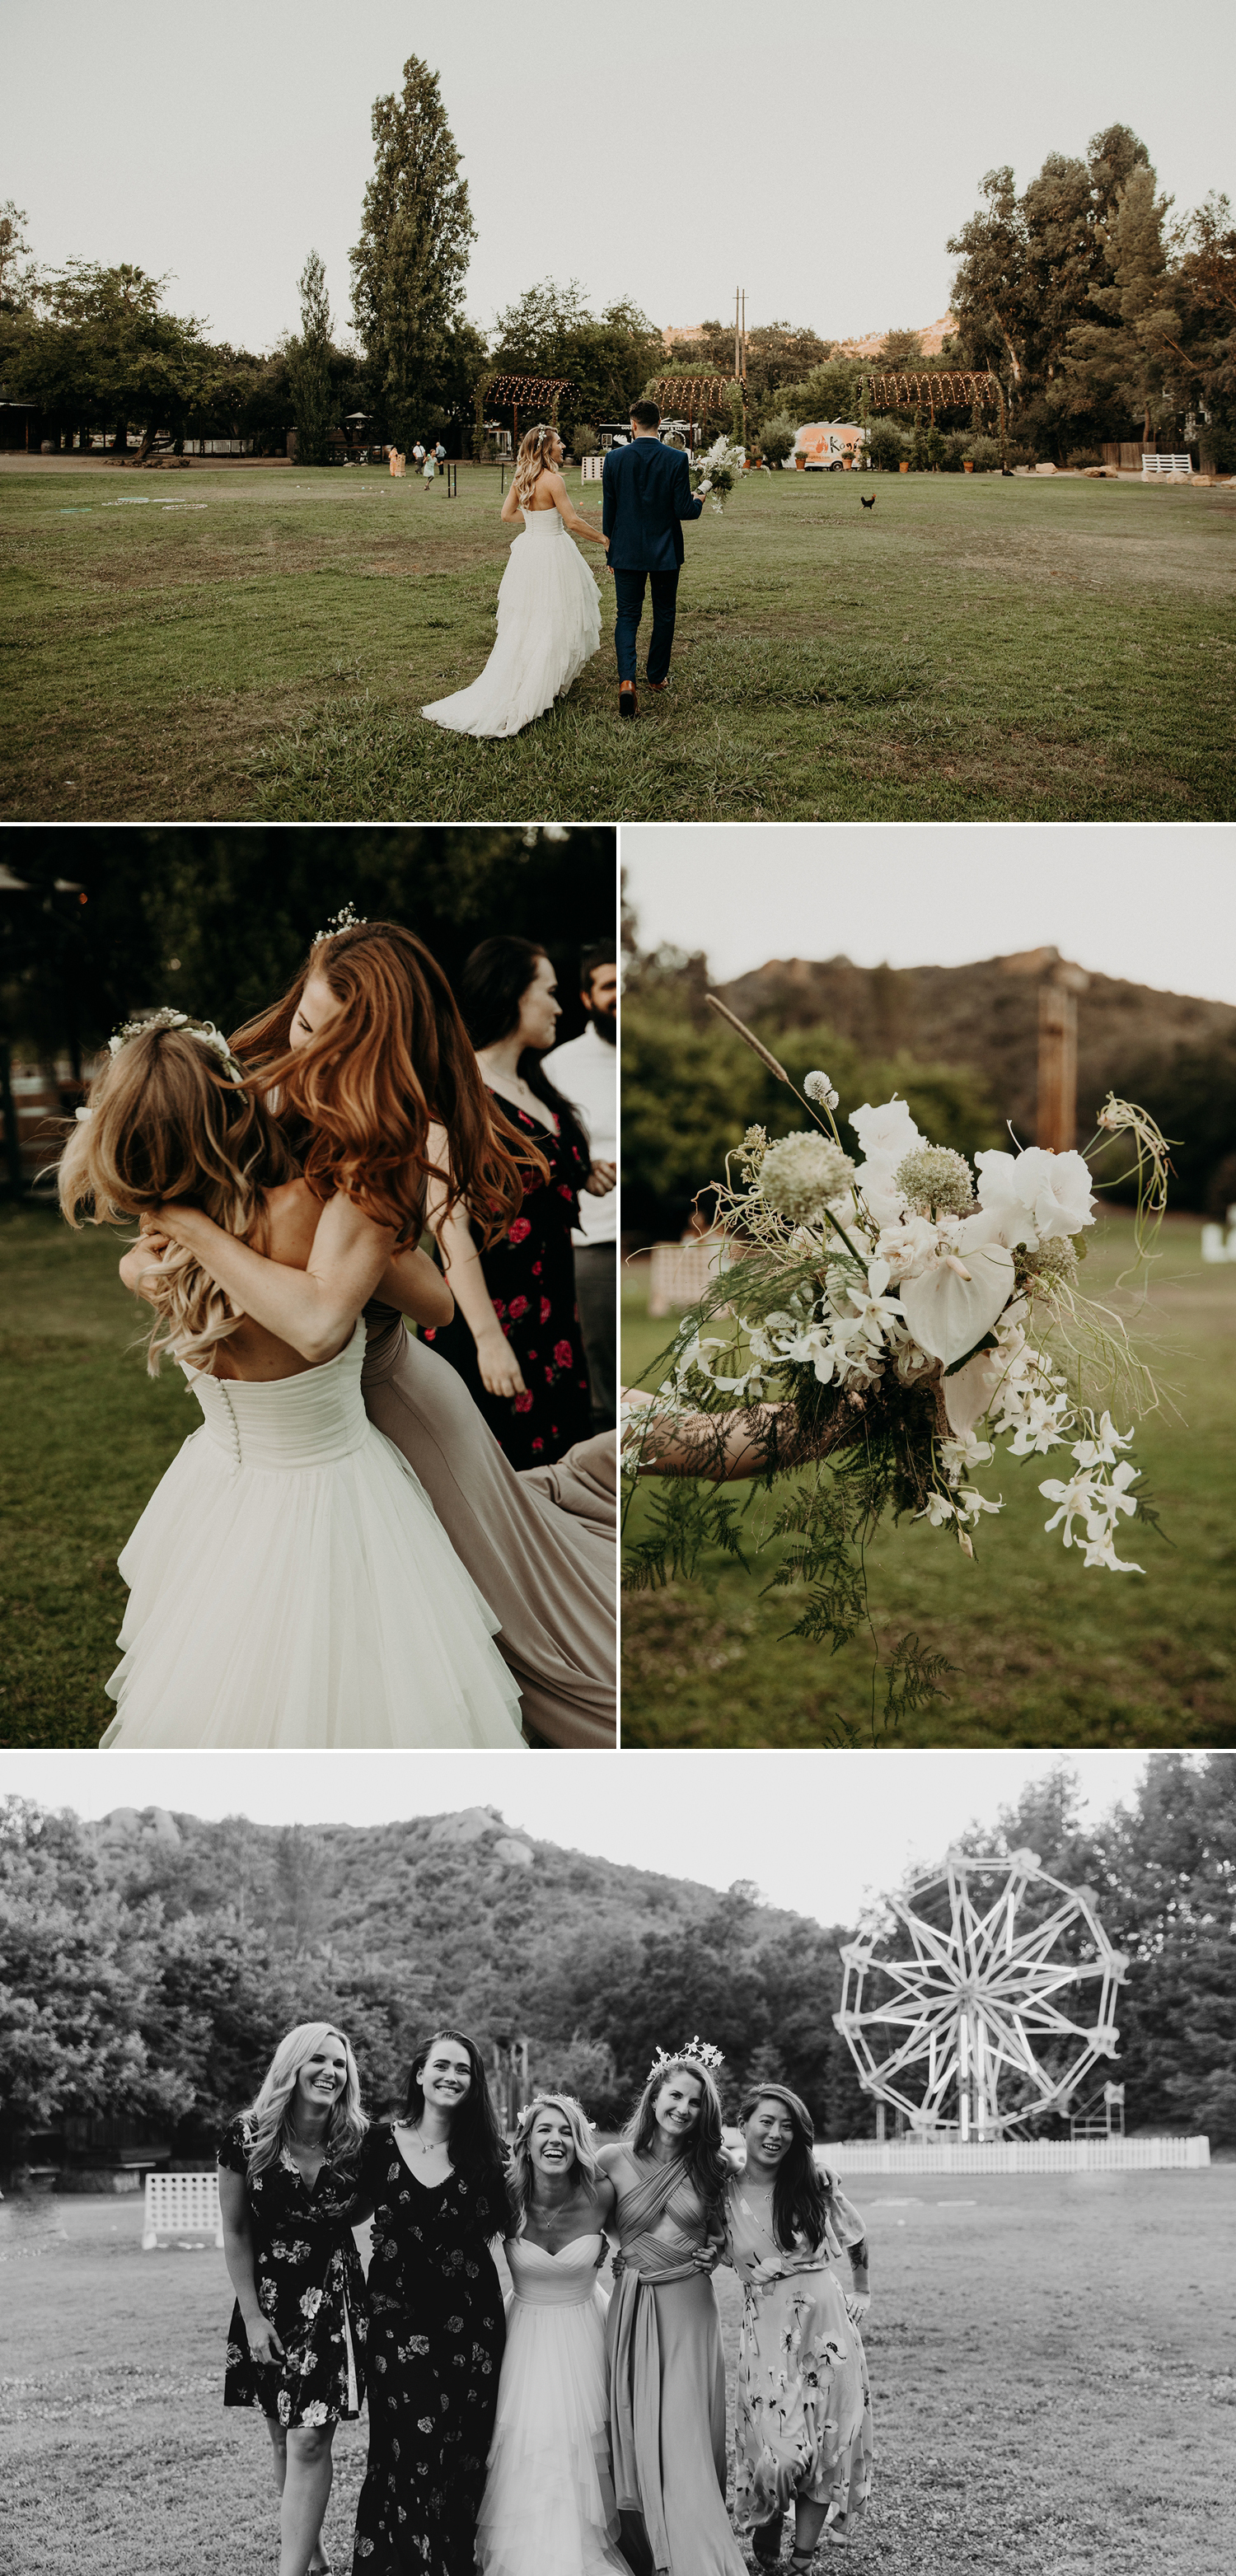 A festival themed wedding at Calamigos Ranch in Malibu, California by Kadi Tobin Photographer